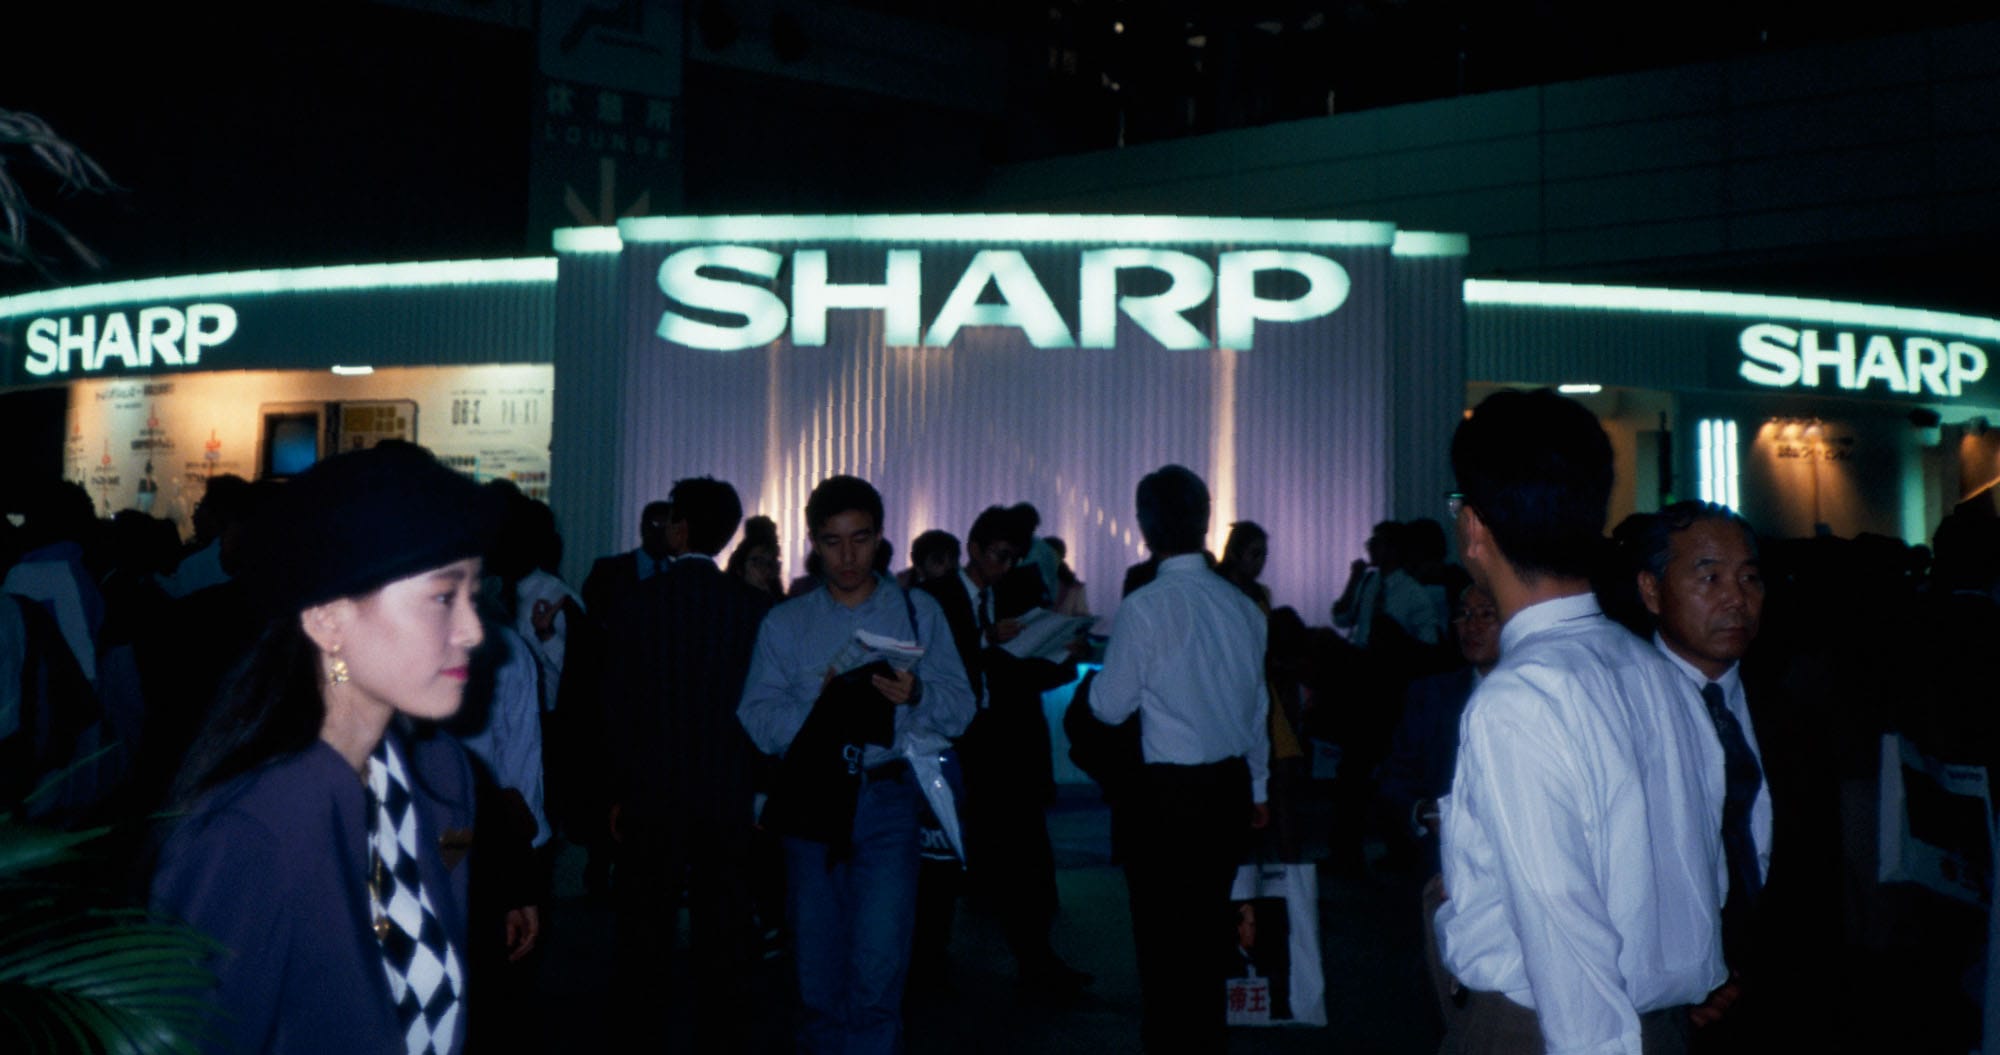 SHARP (Electronics) Exhibition